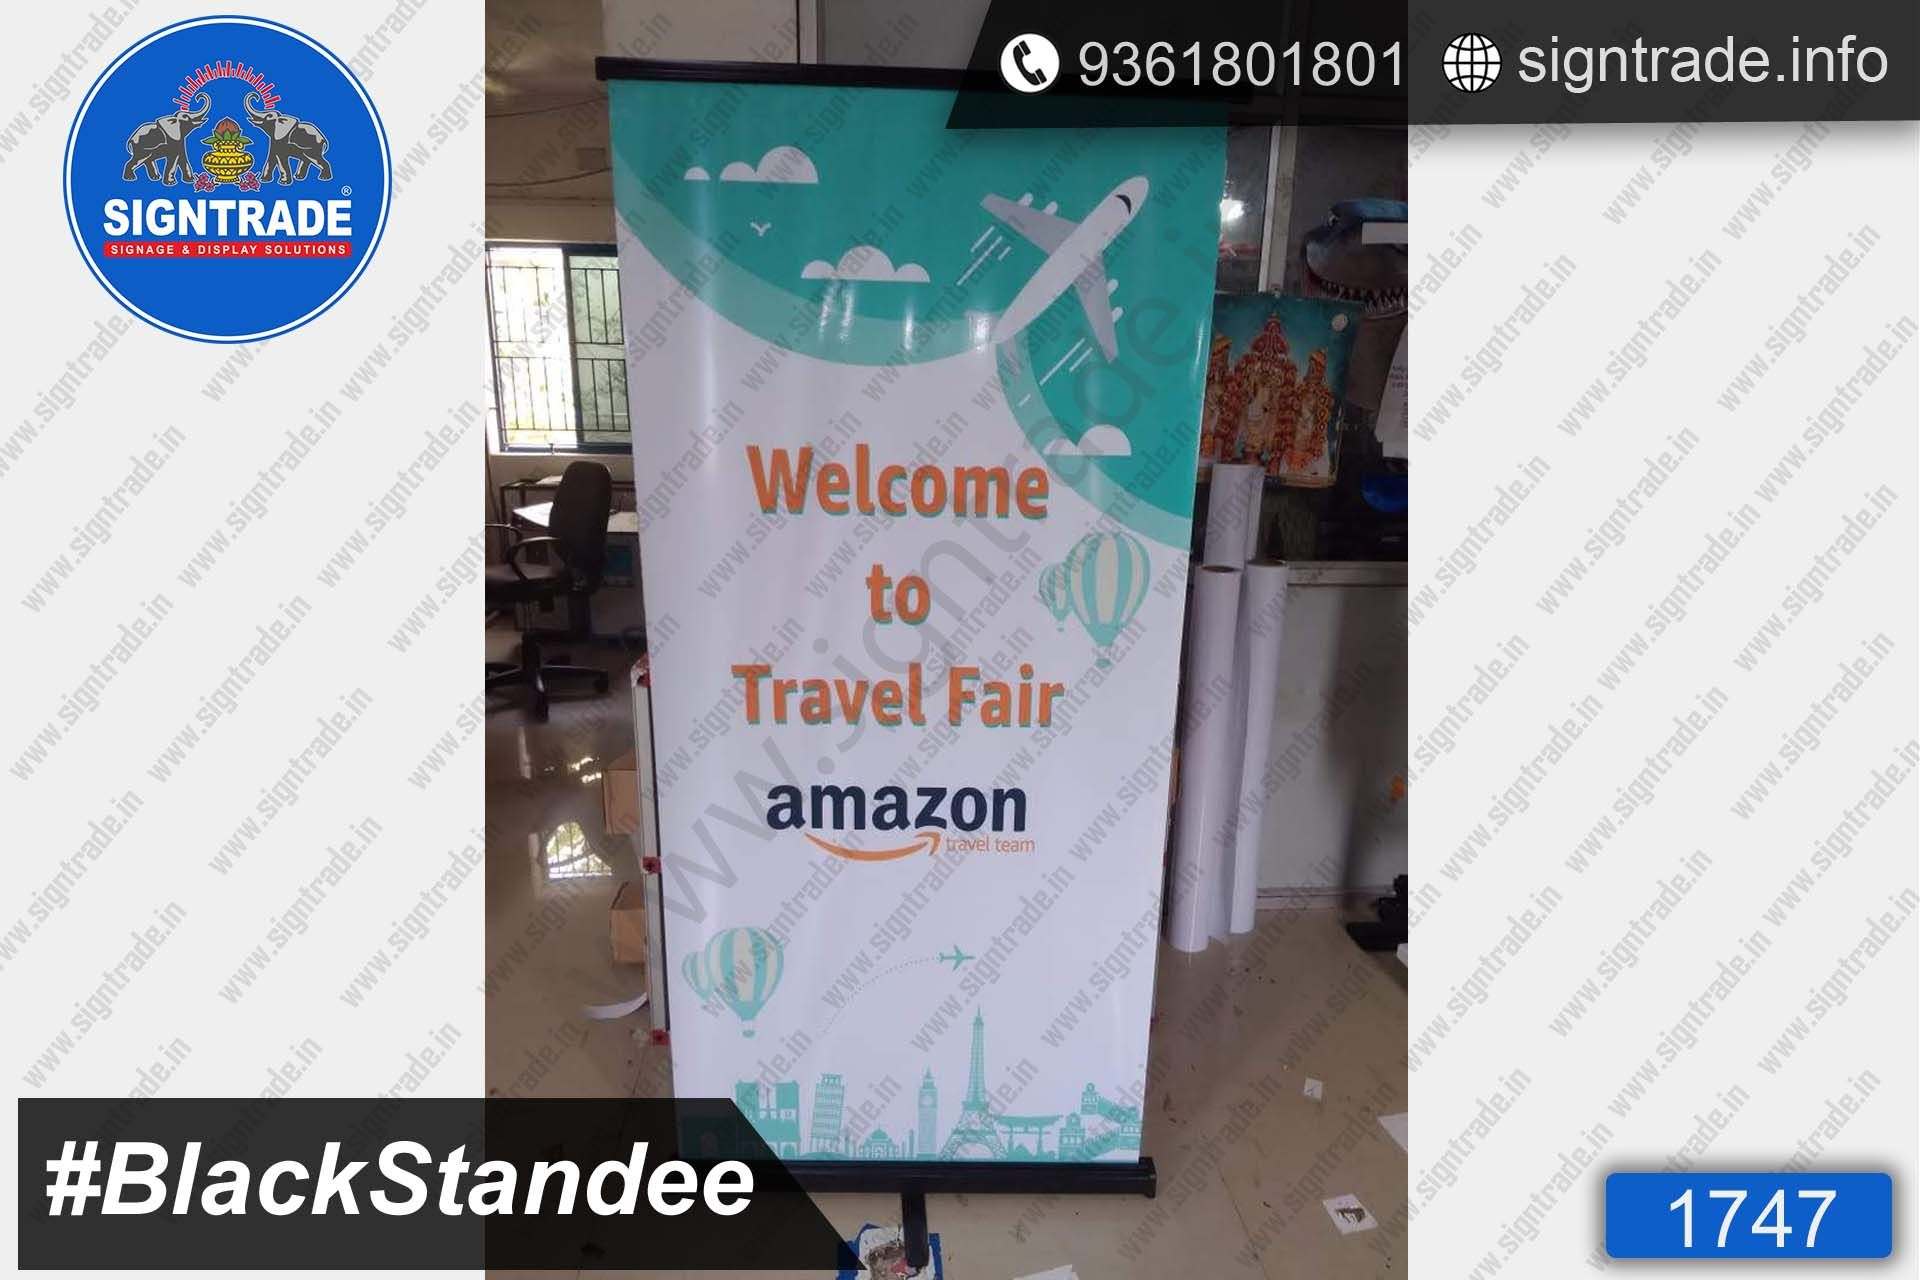 amazon travel team black standee